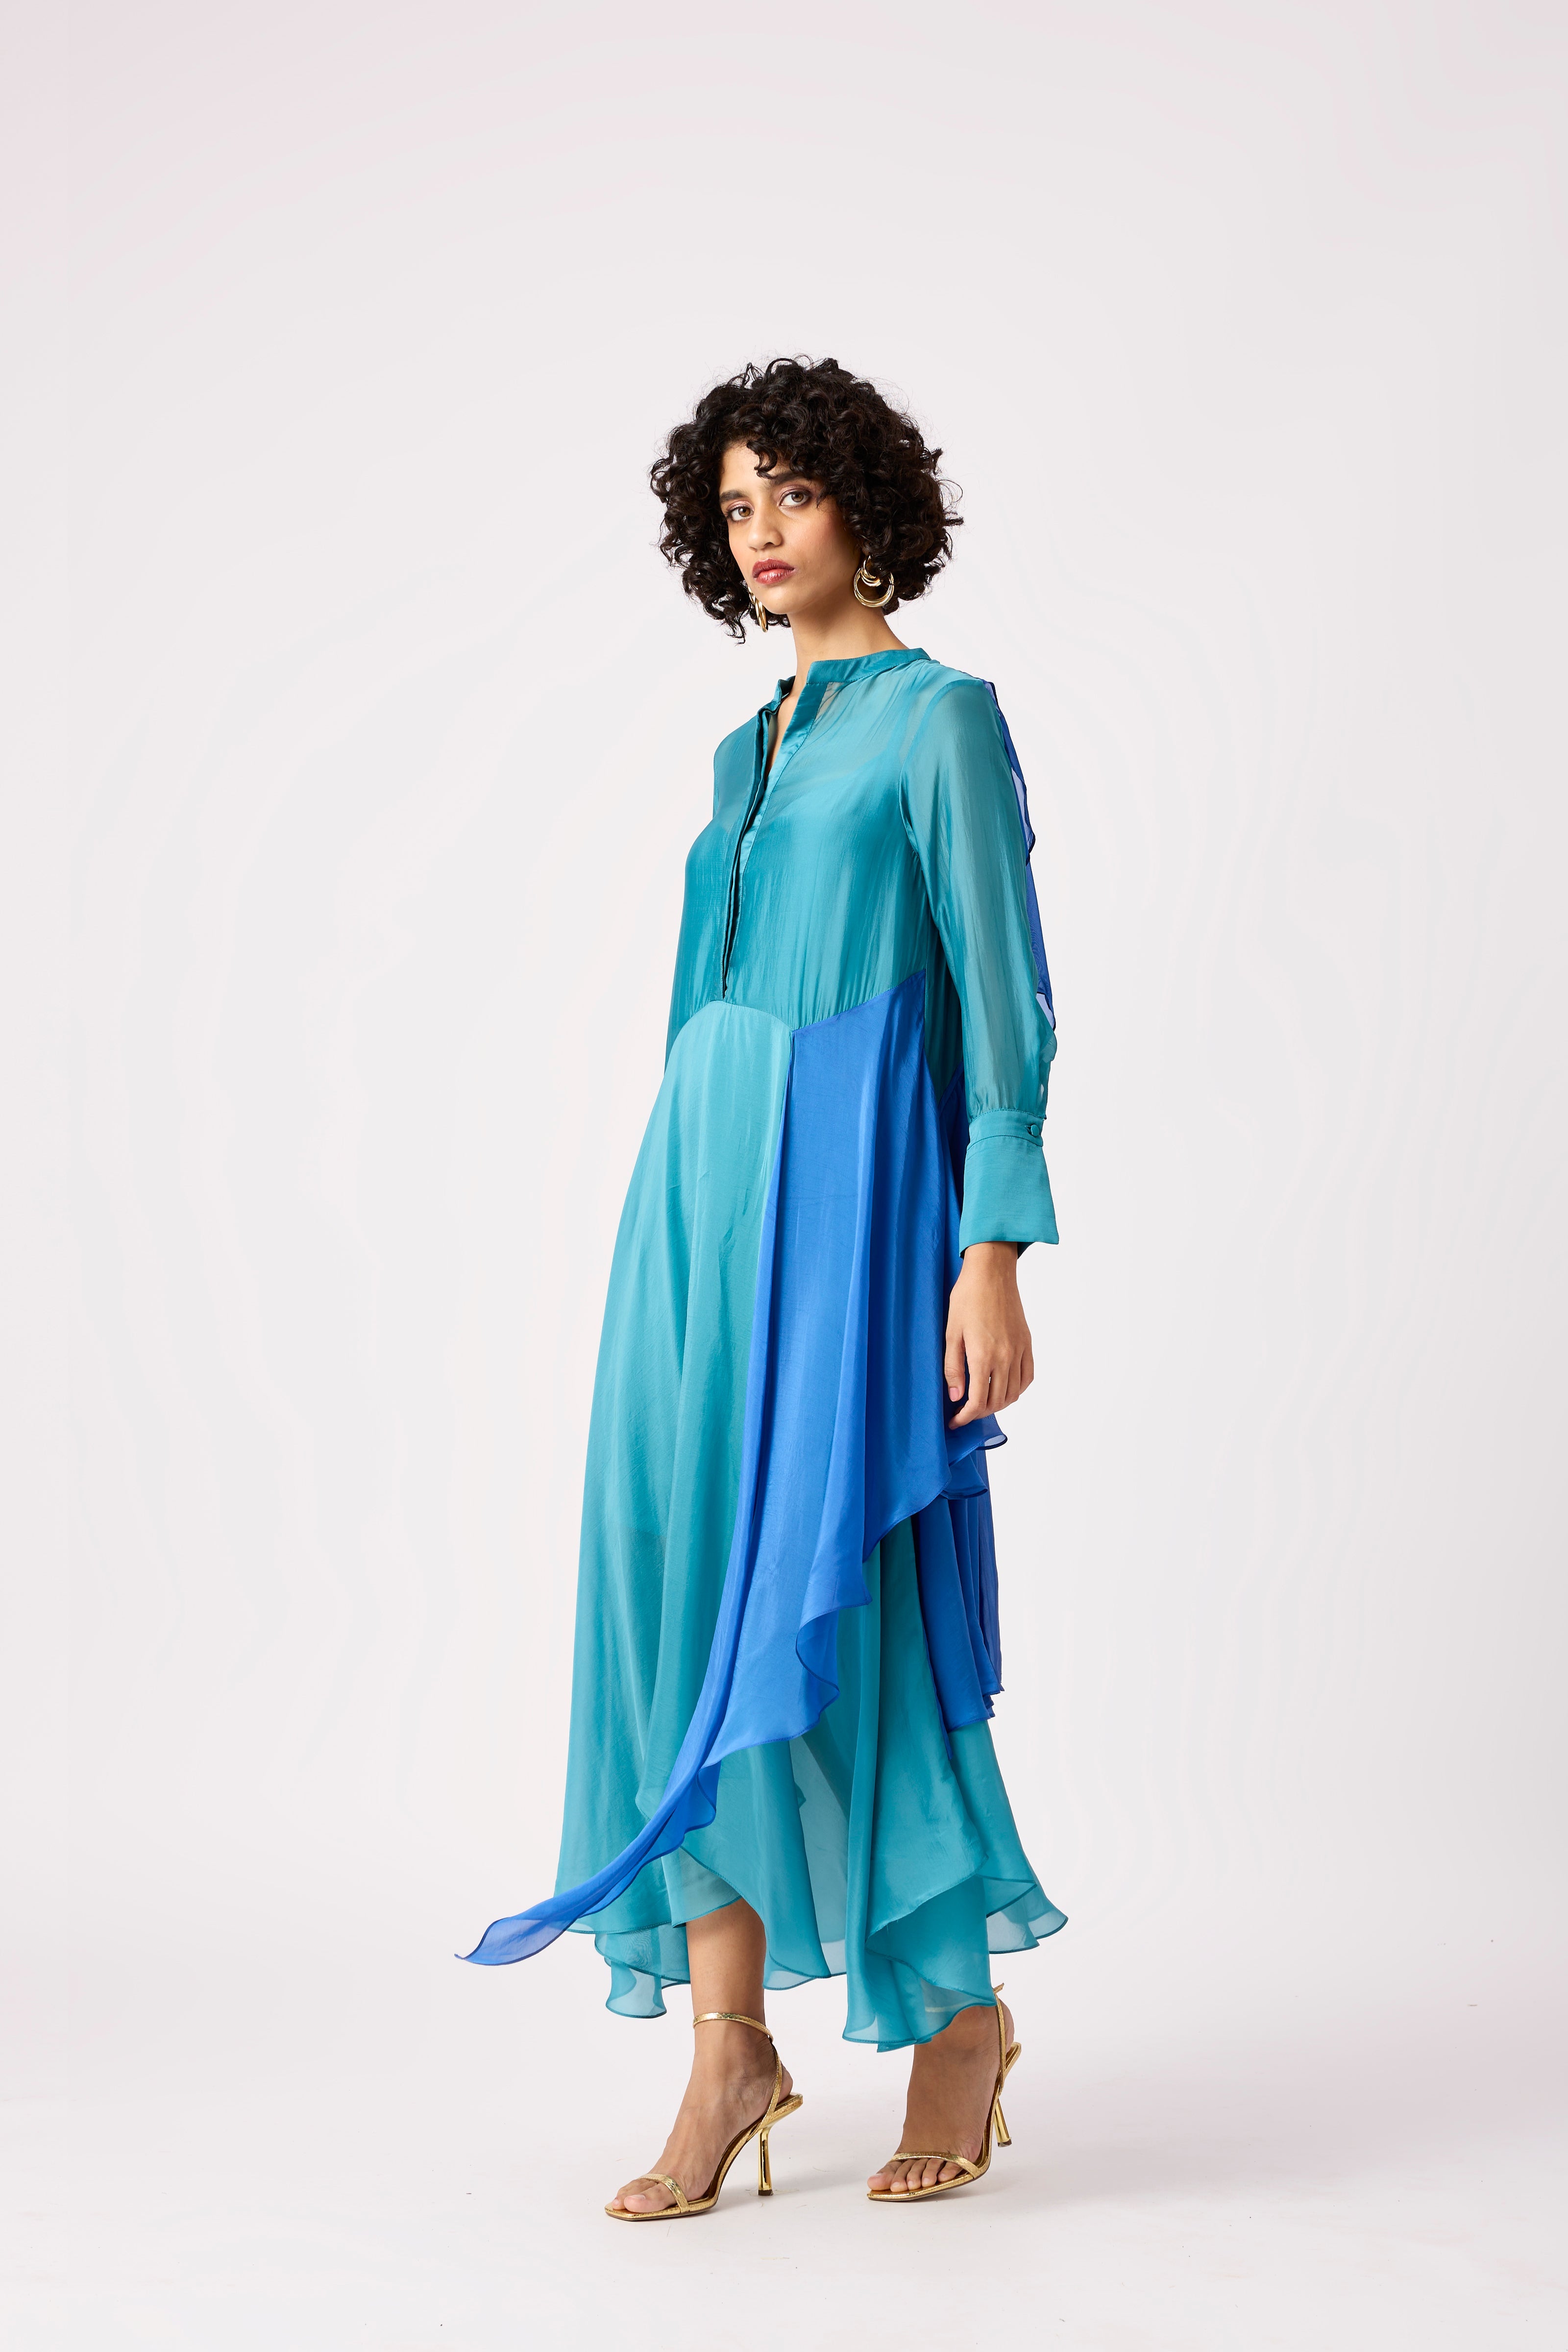 Clive Organza Shirt Dress - Turquoise & Azure Blue